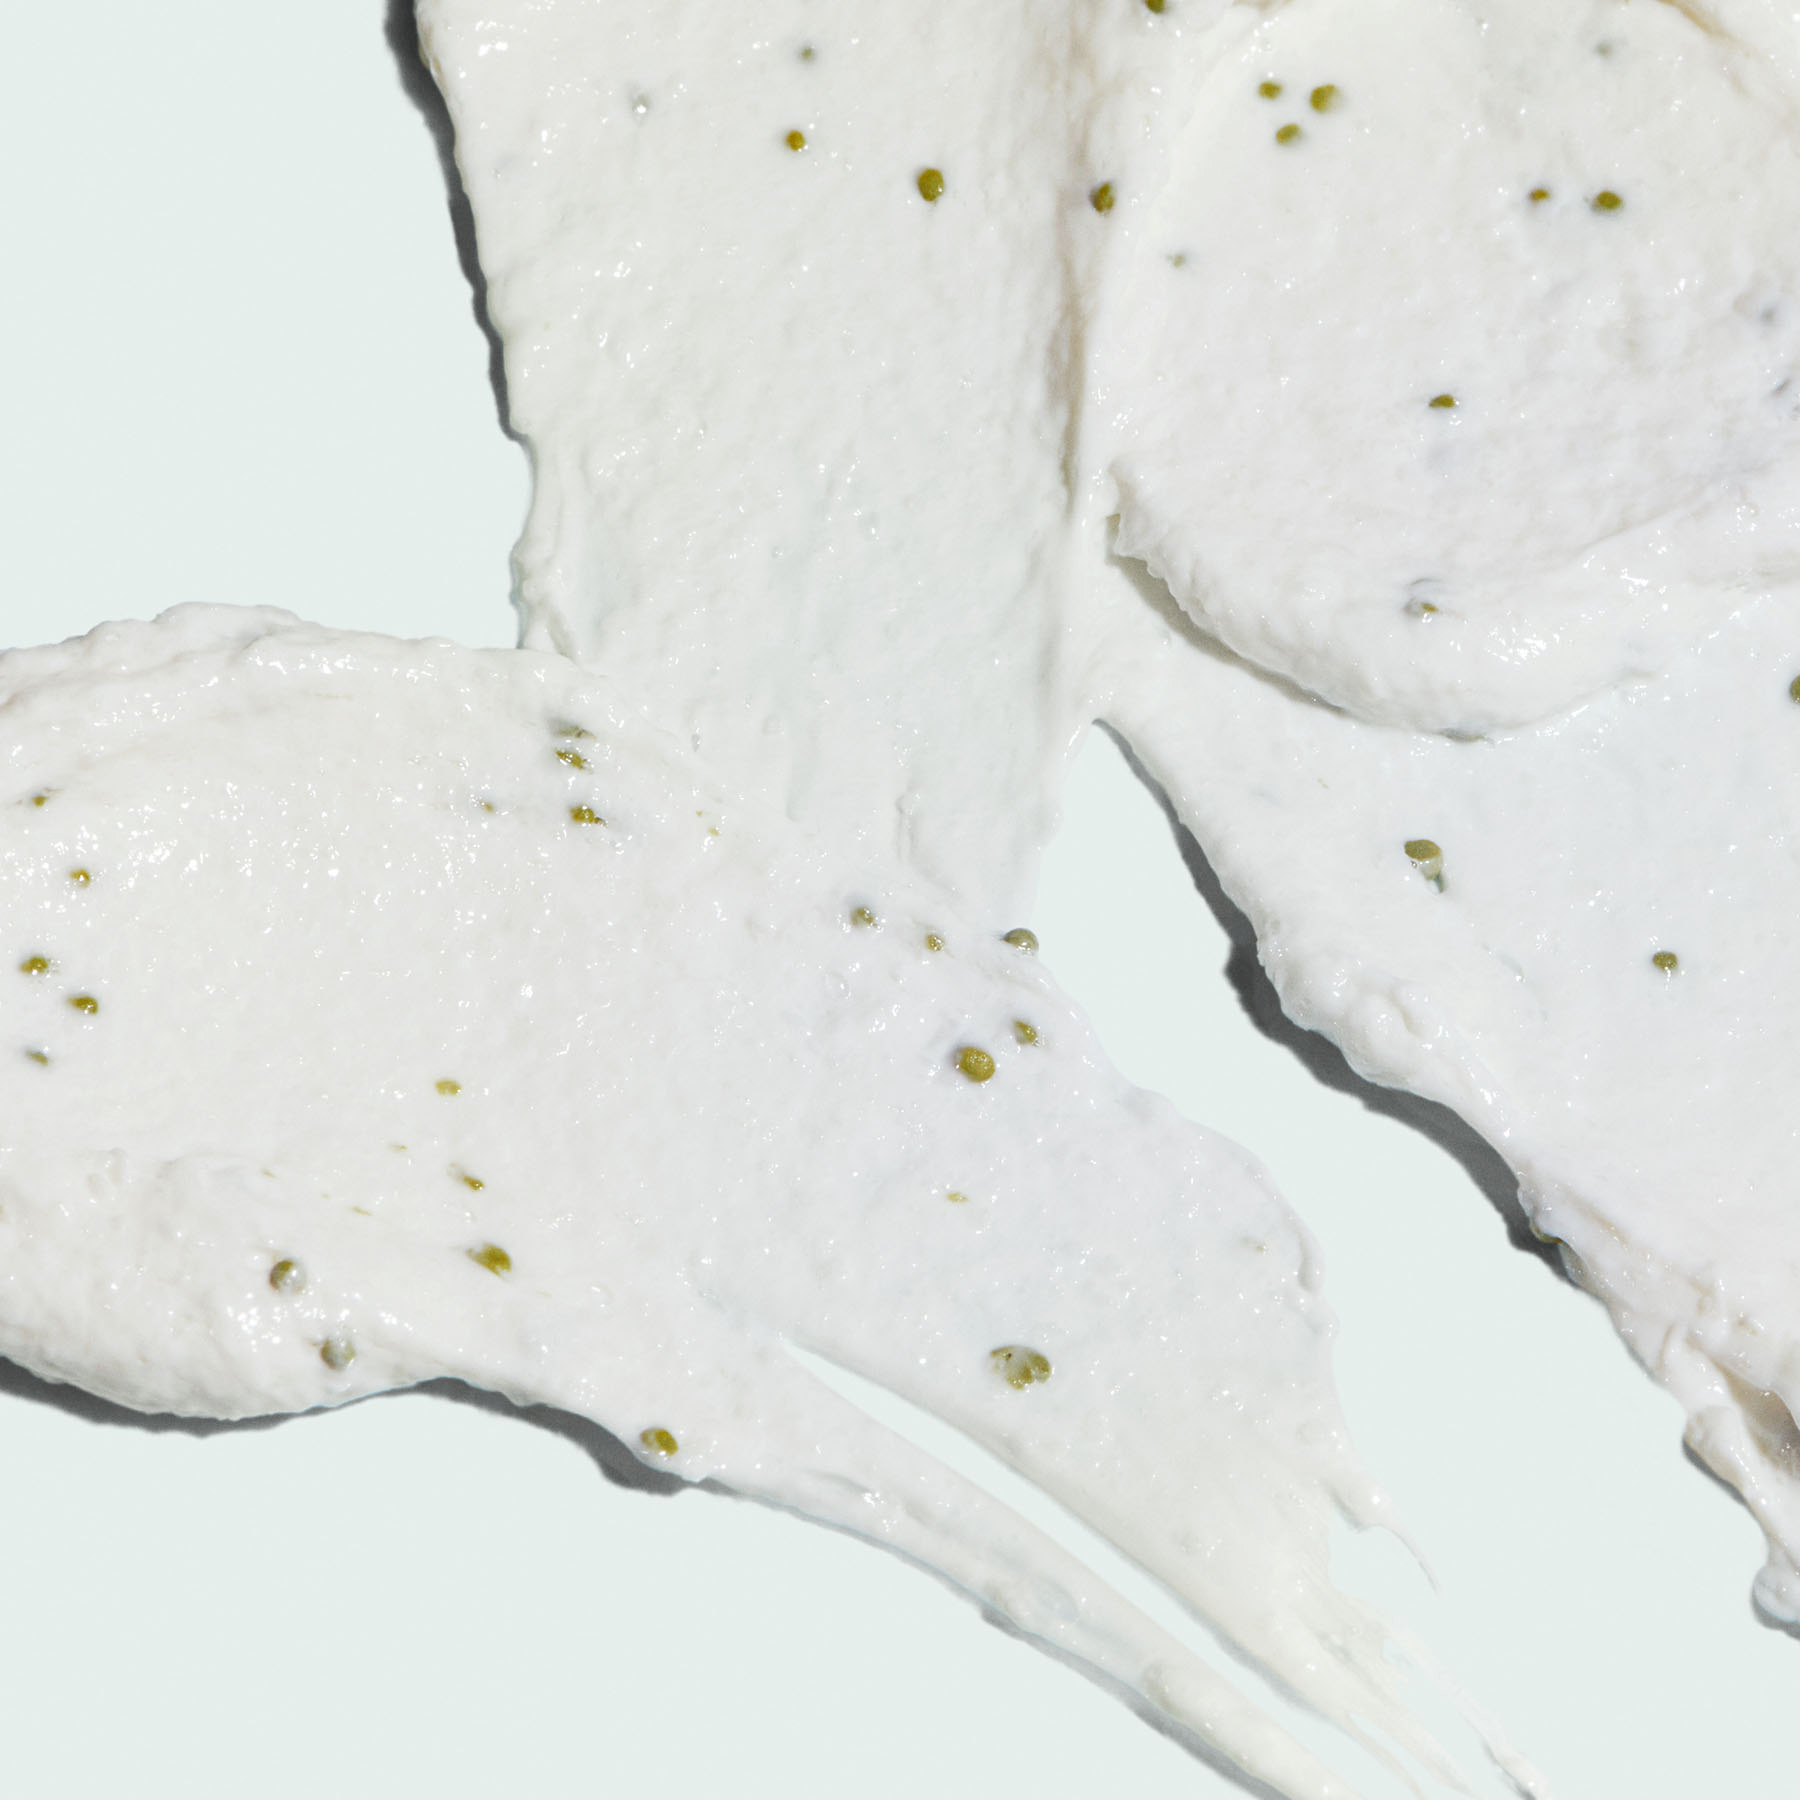 Creamy and Smooth Texture - ILUMA Intense Brightening Exfoliating Cleanser